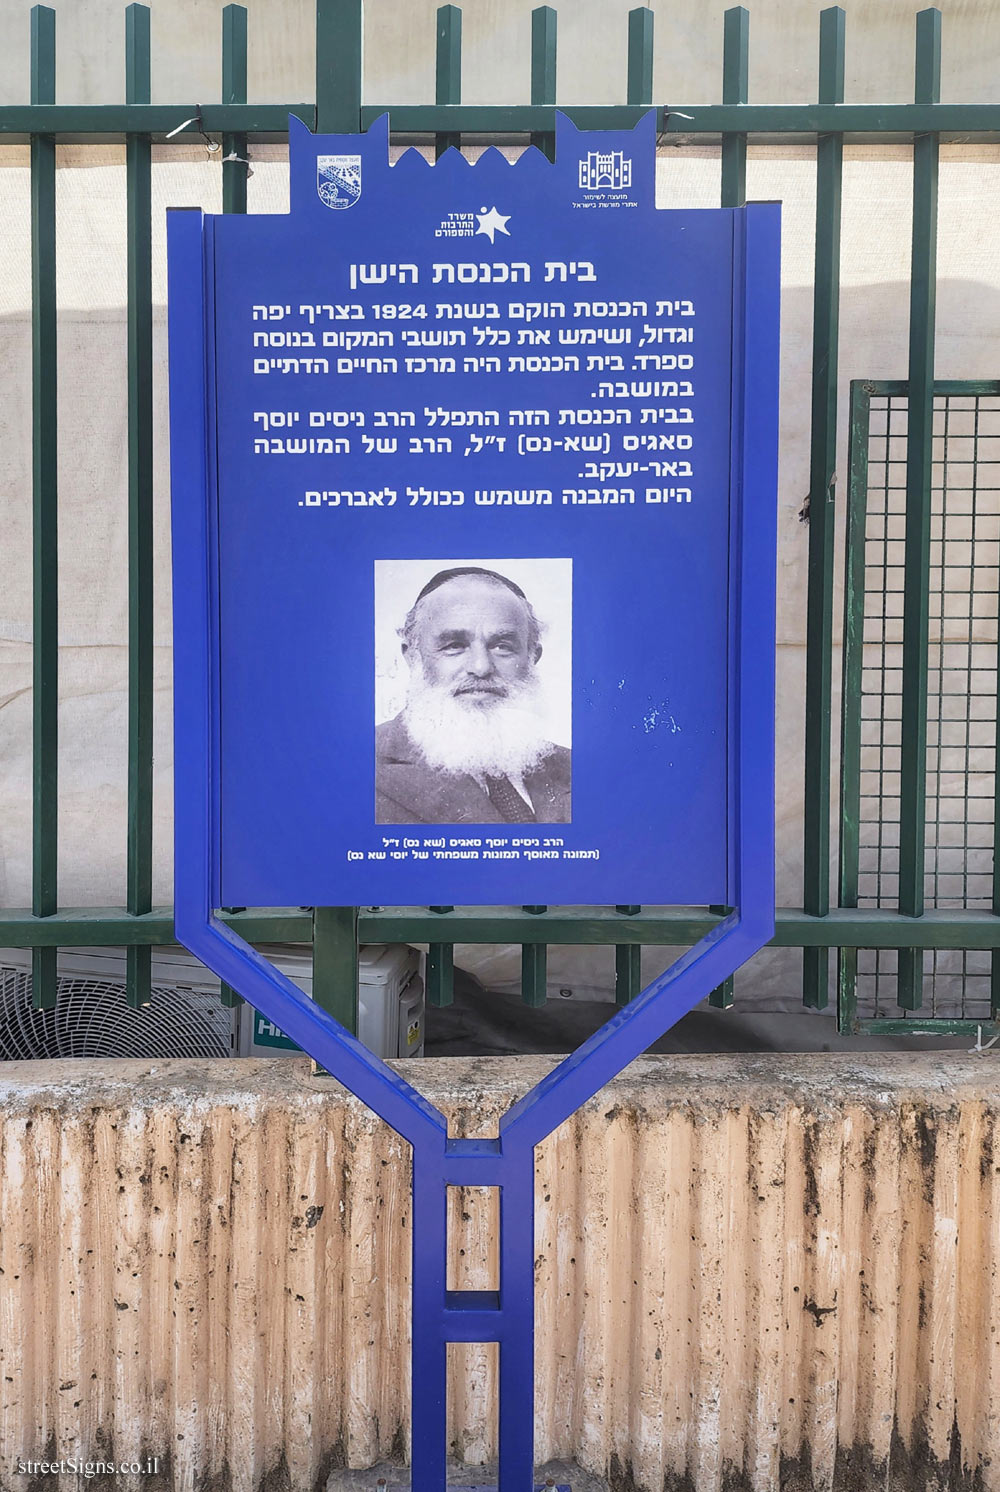 Be’er Ya’akov - Heritage Sites in Israel - The old synagogue